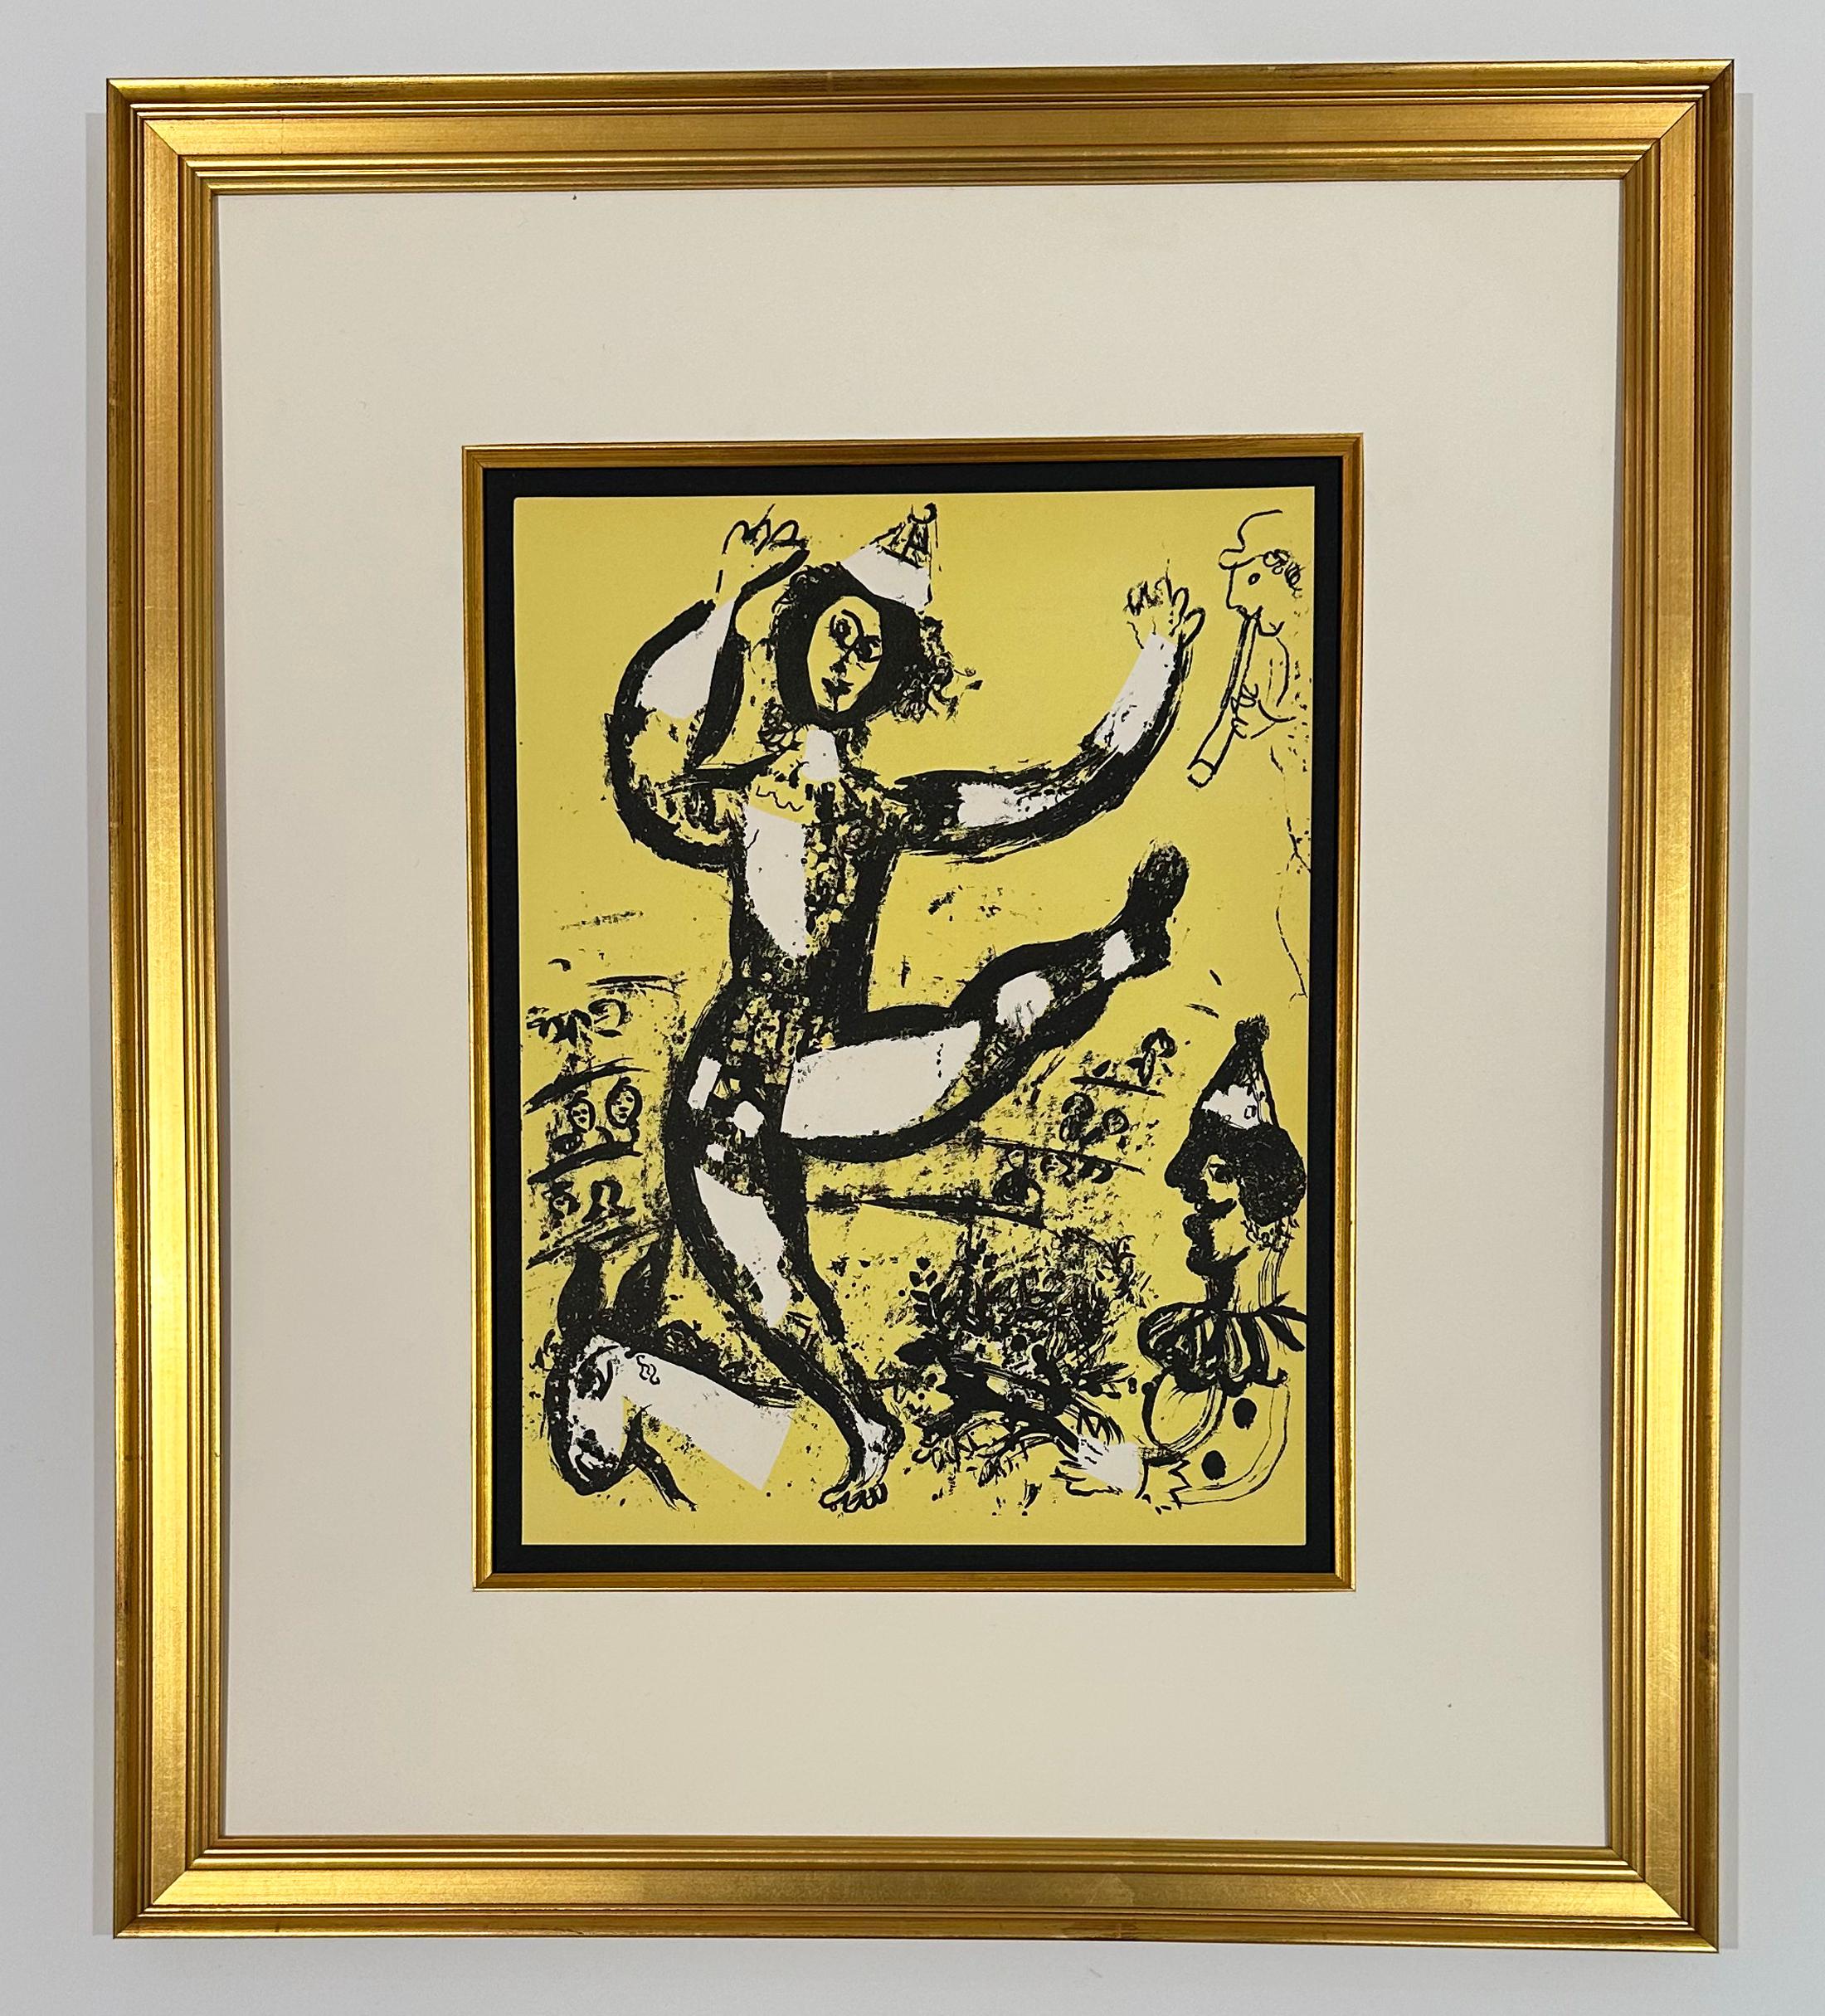 Le cirque, de 1960 Lithographie de Mourlot I - Print de Marc Chagall